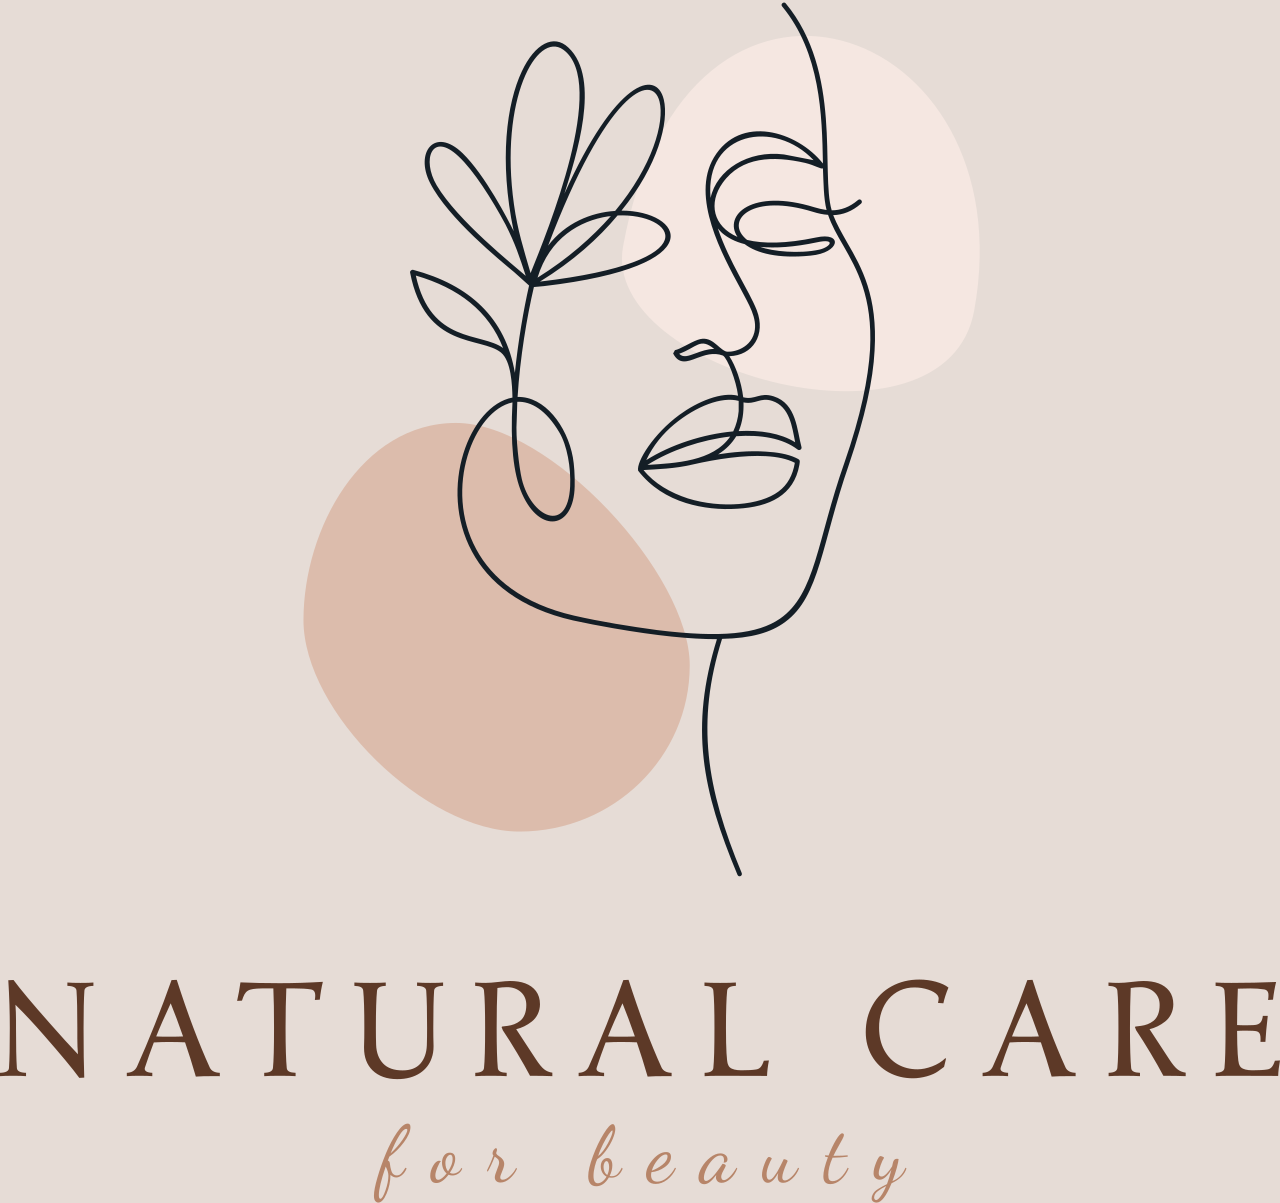 Natural care's logo